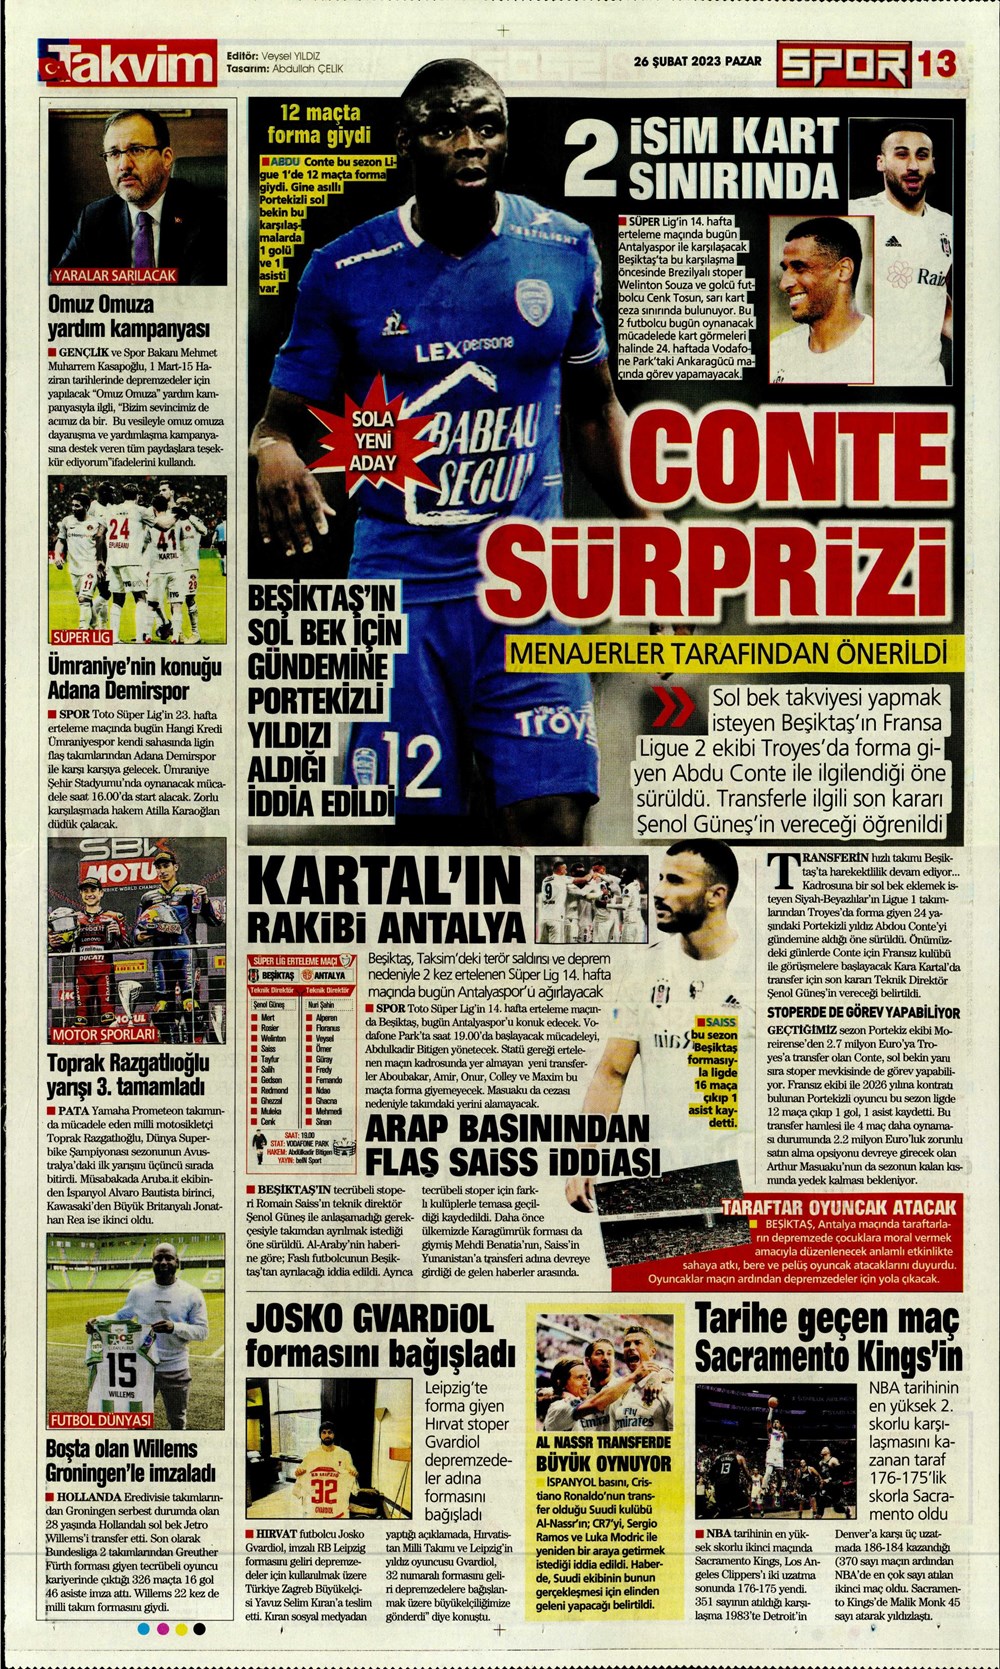 "Valenci'ağa' böyle istedi" - Sporun manşetleri  - 29. Foto